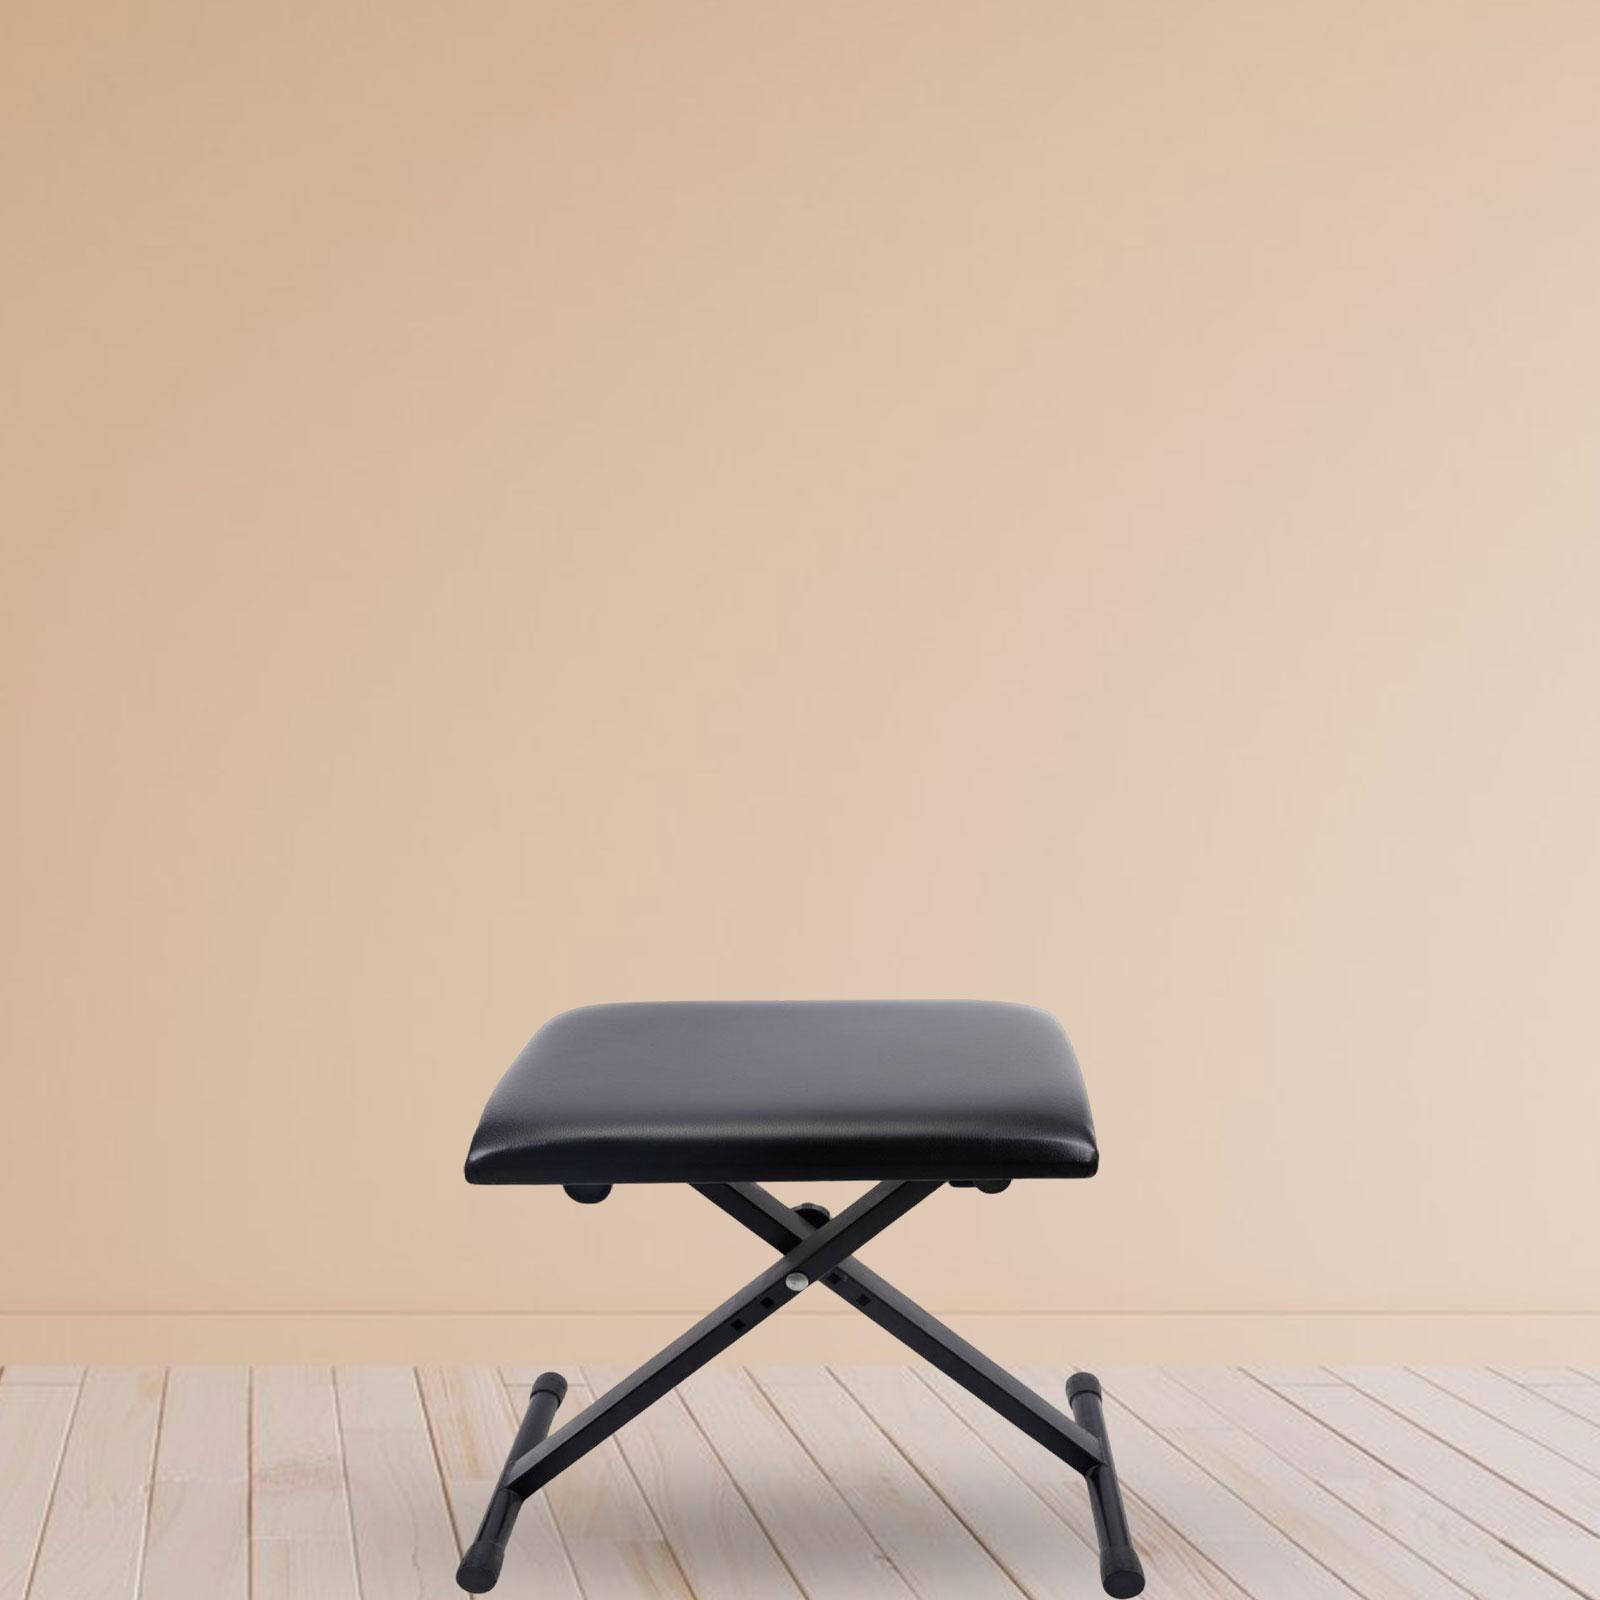 Portable Arm Leg Rest Stand Supplies Nonslip Tripod for Artist home